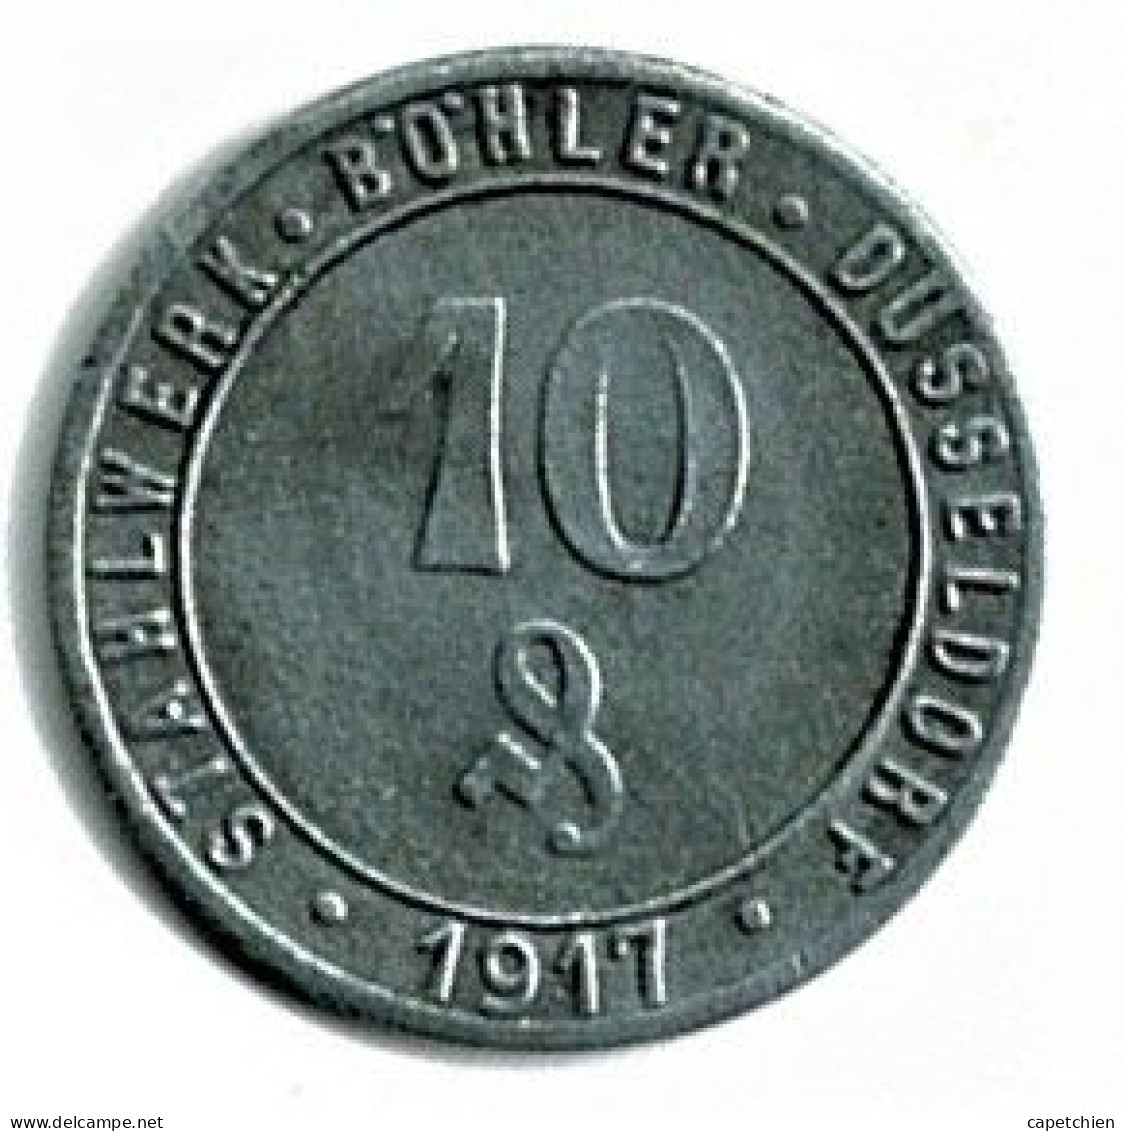 ALLEMAGNE / NOTGELD / STAHL WERK BÖHLER DÜSSELDORF / 50 PFG../ 1917 / ZINC / 22  Mm / ETAT SUPERBE / 3352.1 - Monétaires/De Nécessité